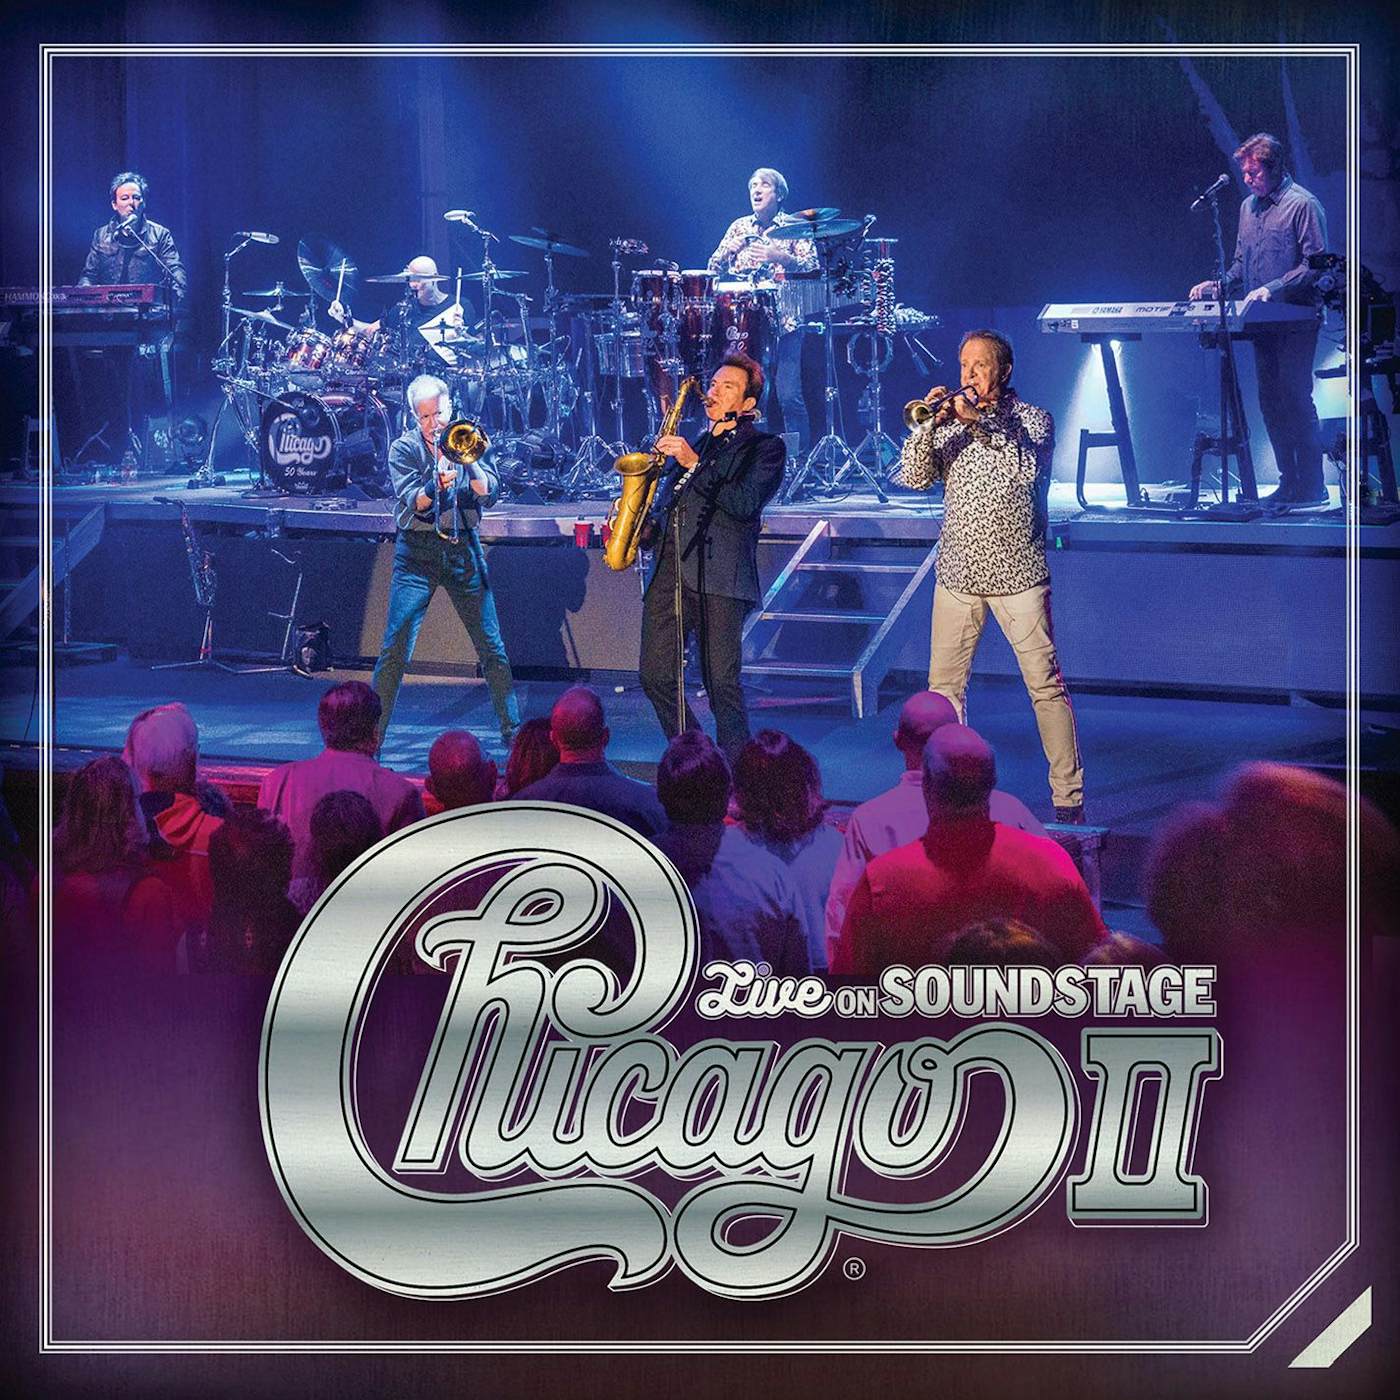 CHICAGO II - LIVE ON SOUNDSTAGE CD